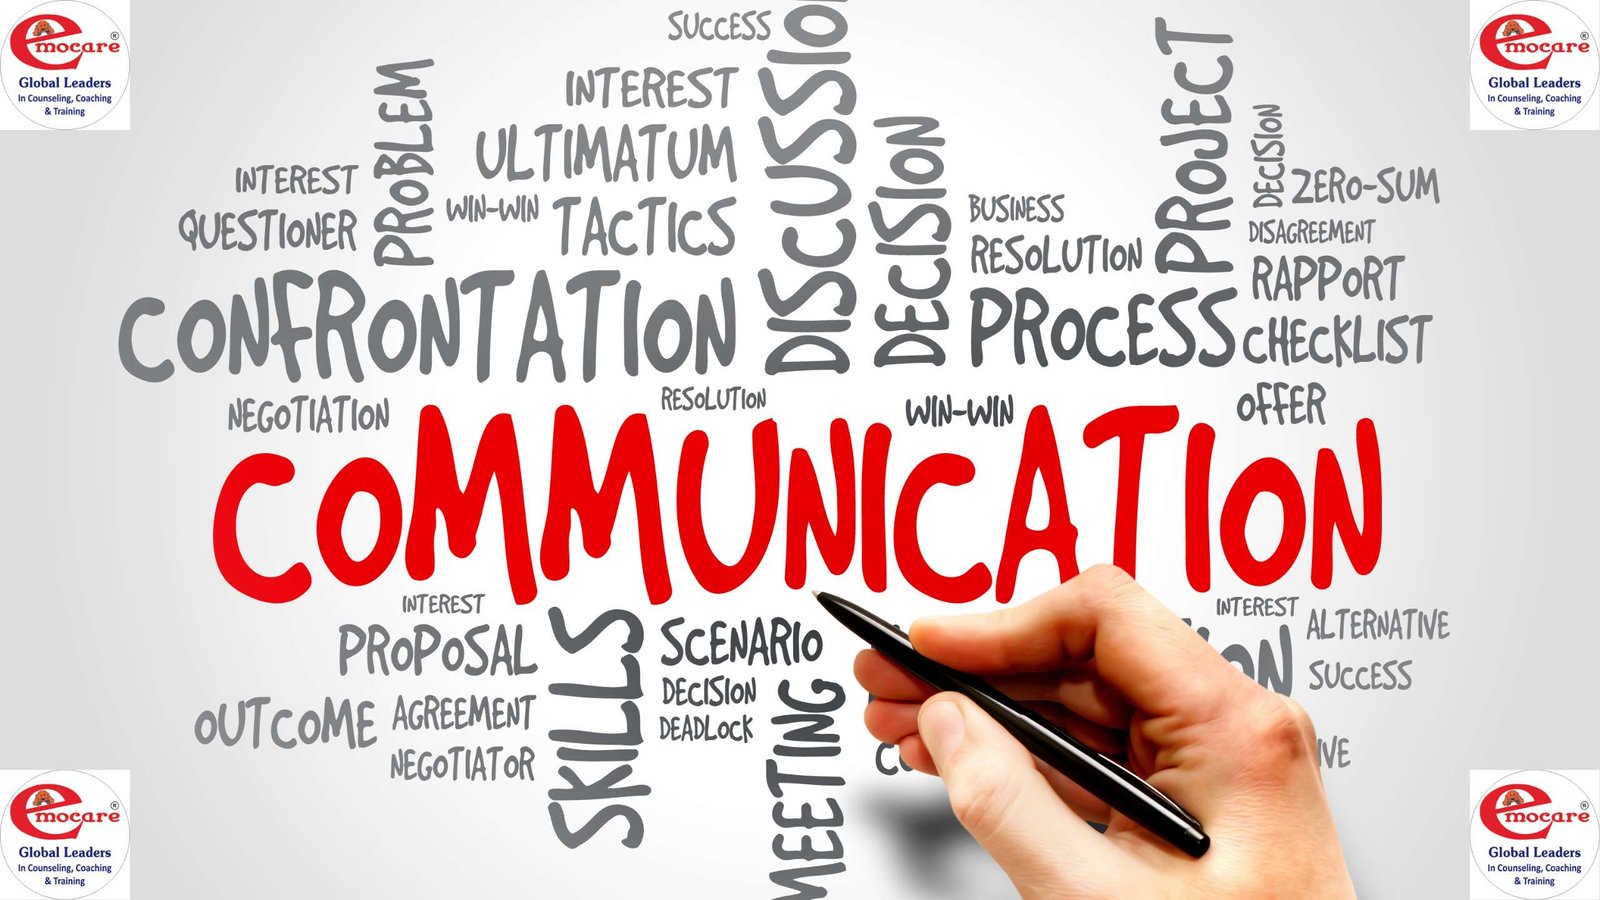 COMMUNICATION SKILLS TRAINING